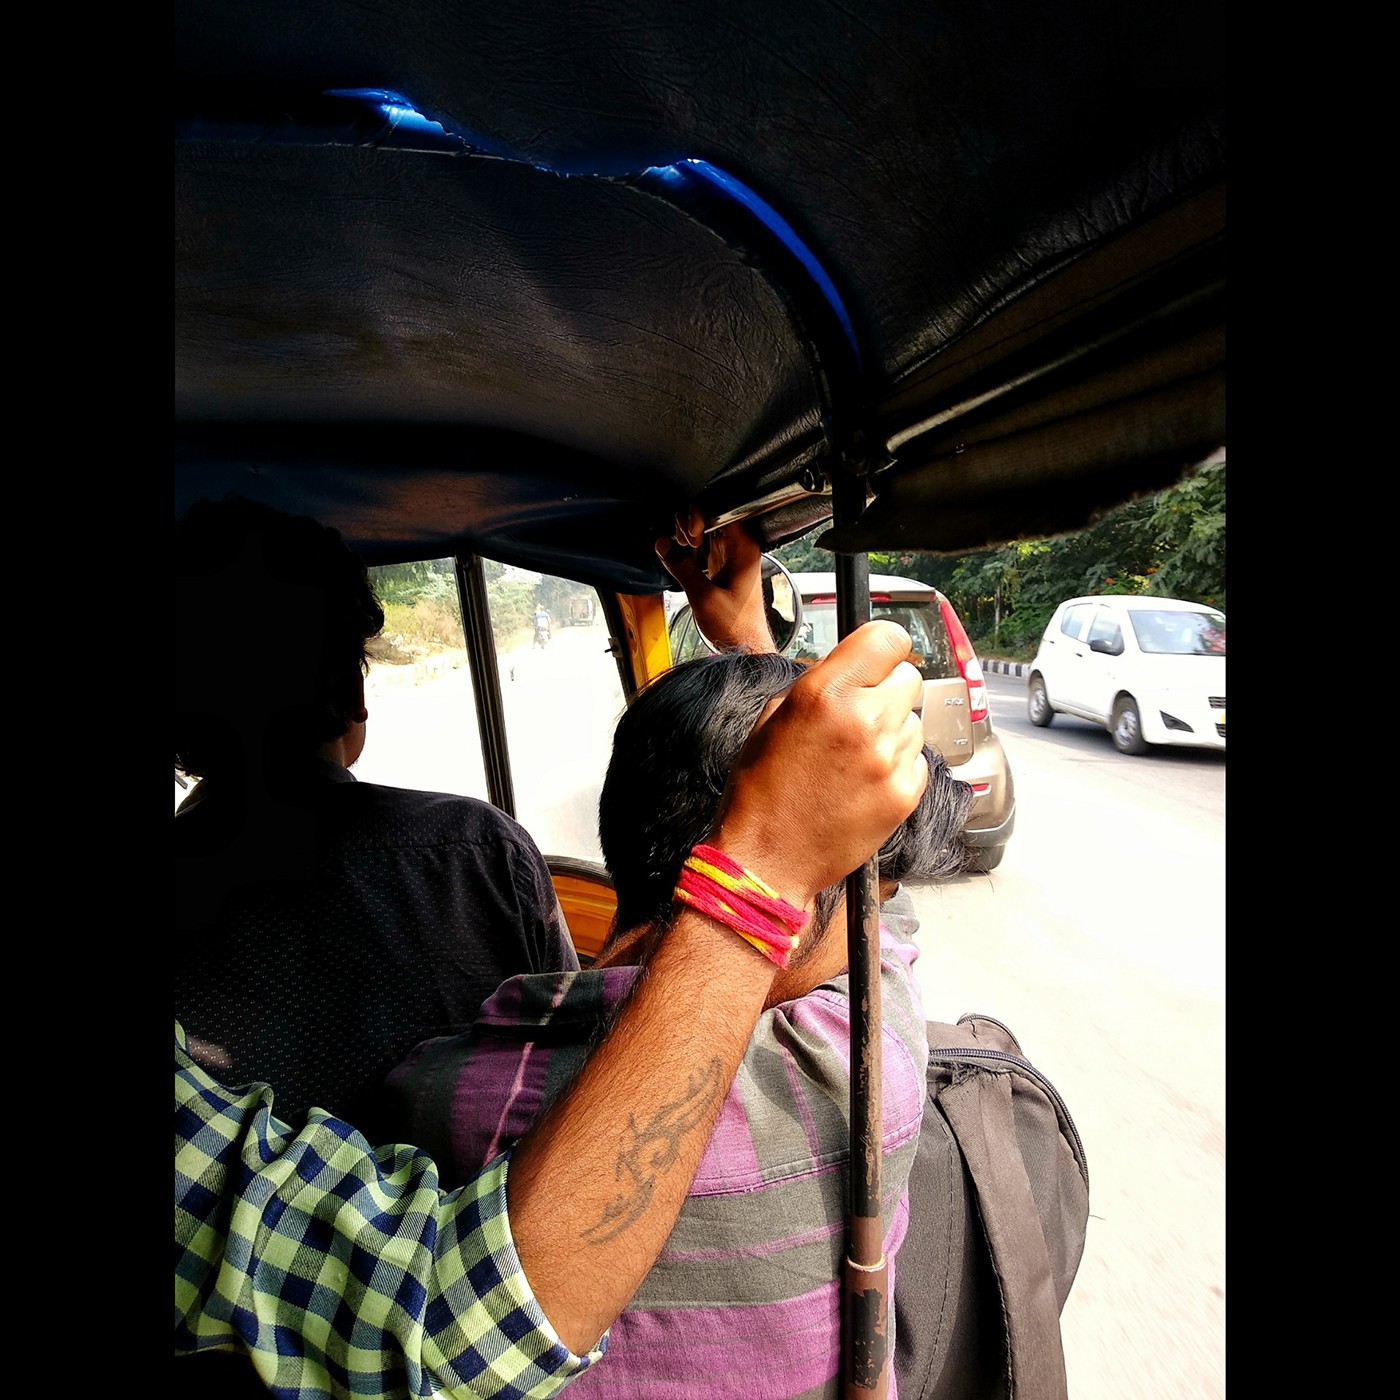 Autorickshaws in India